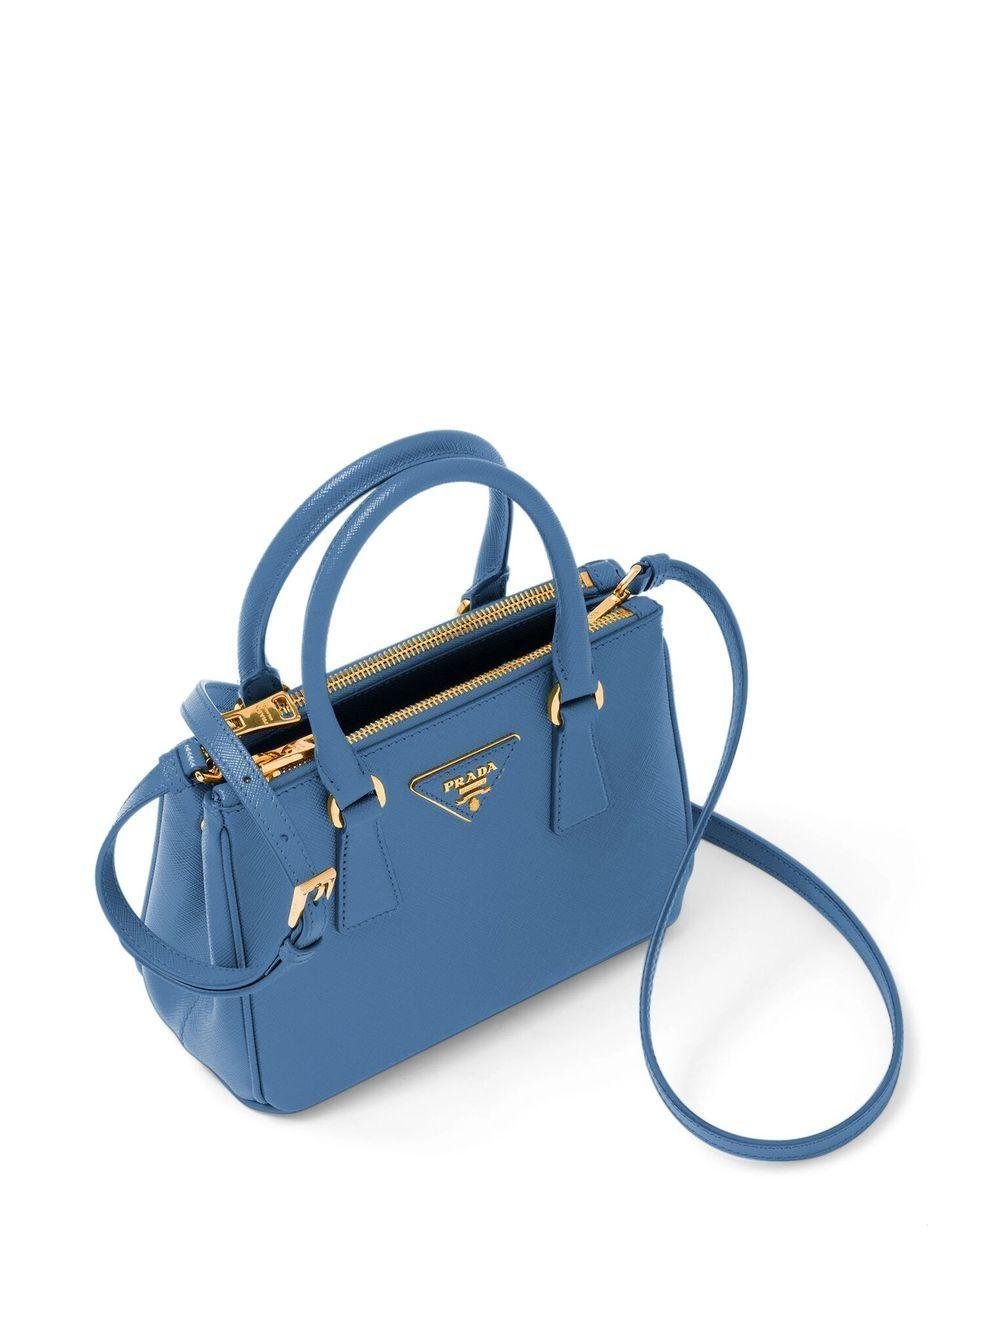 Prada Galleria Saffiano Leather Mini Bag in Blue | Lyst